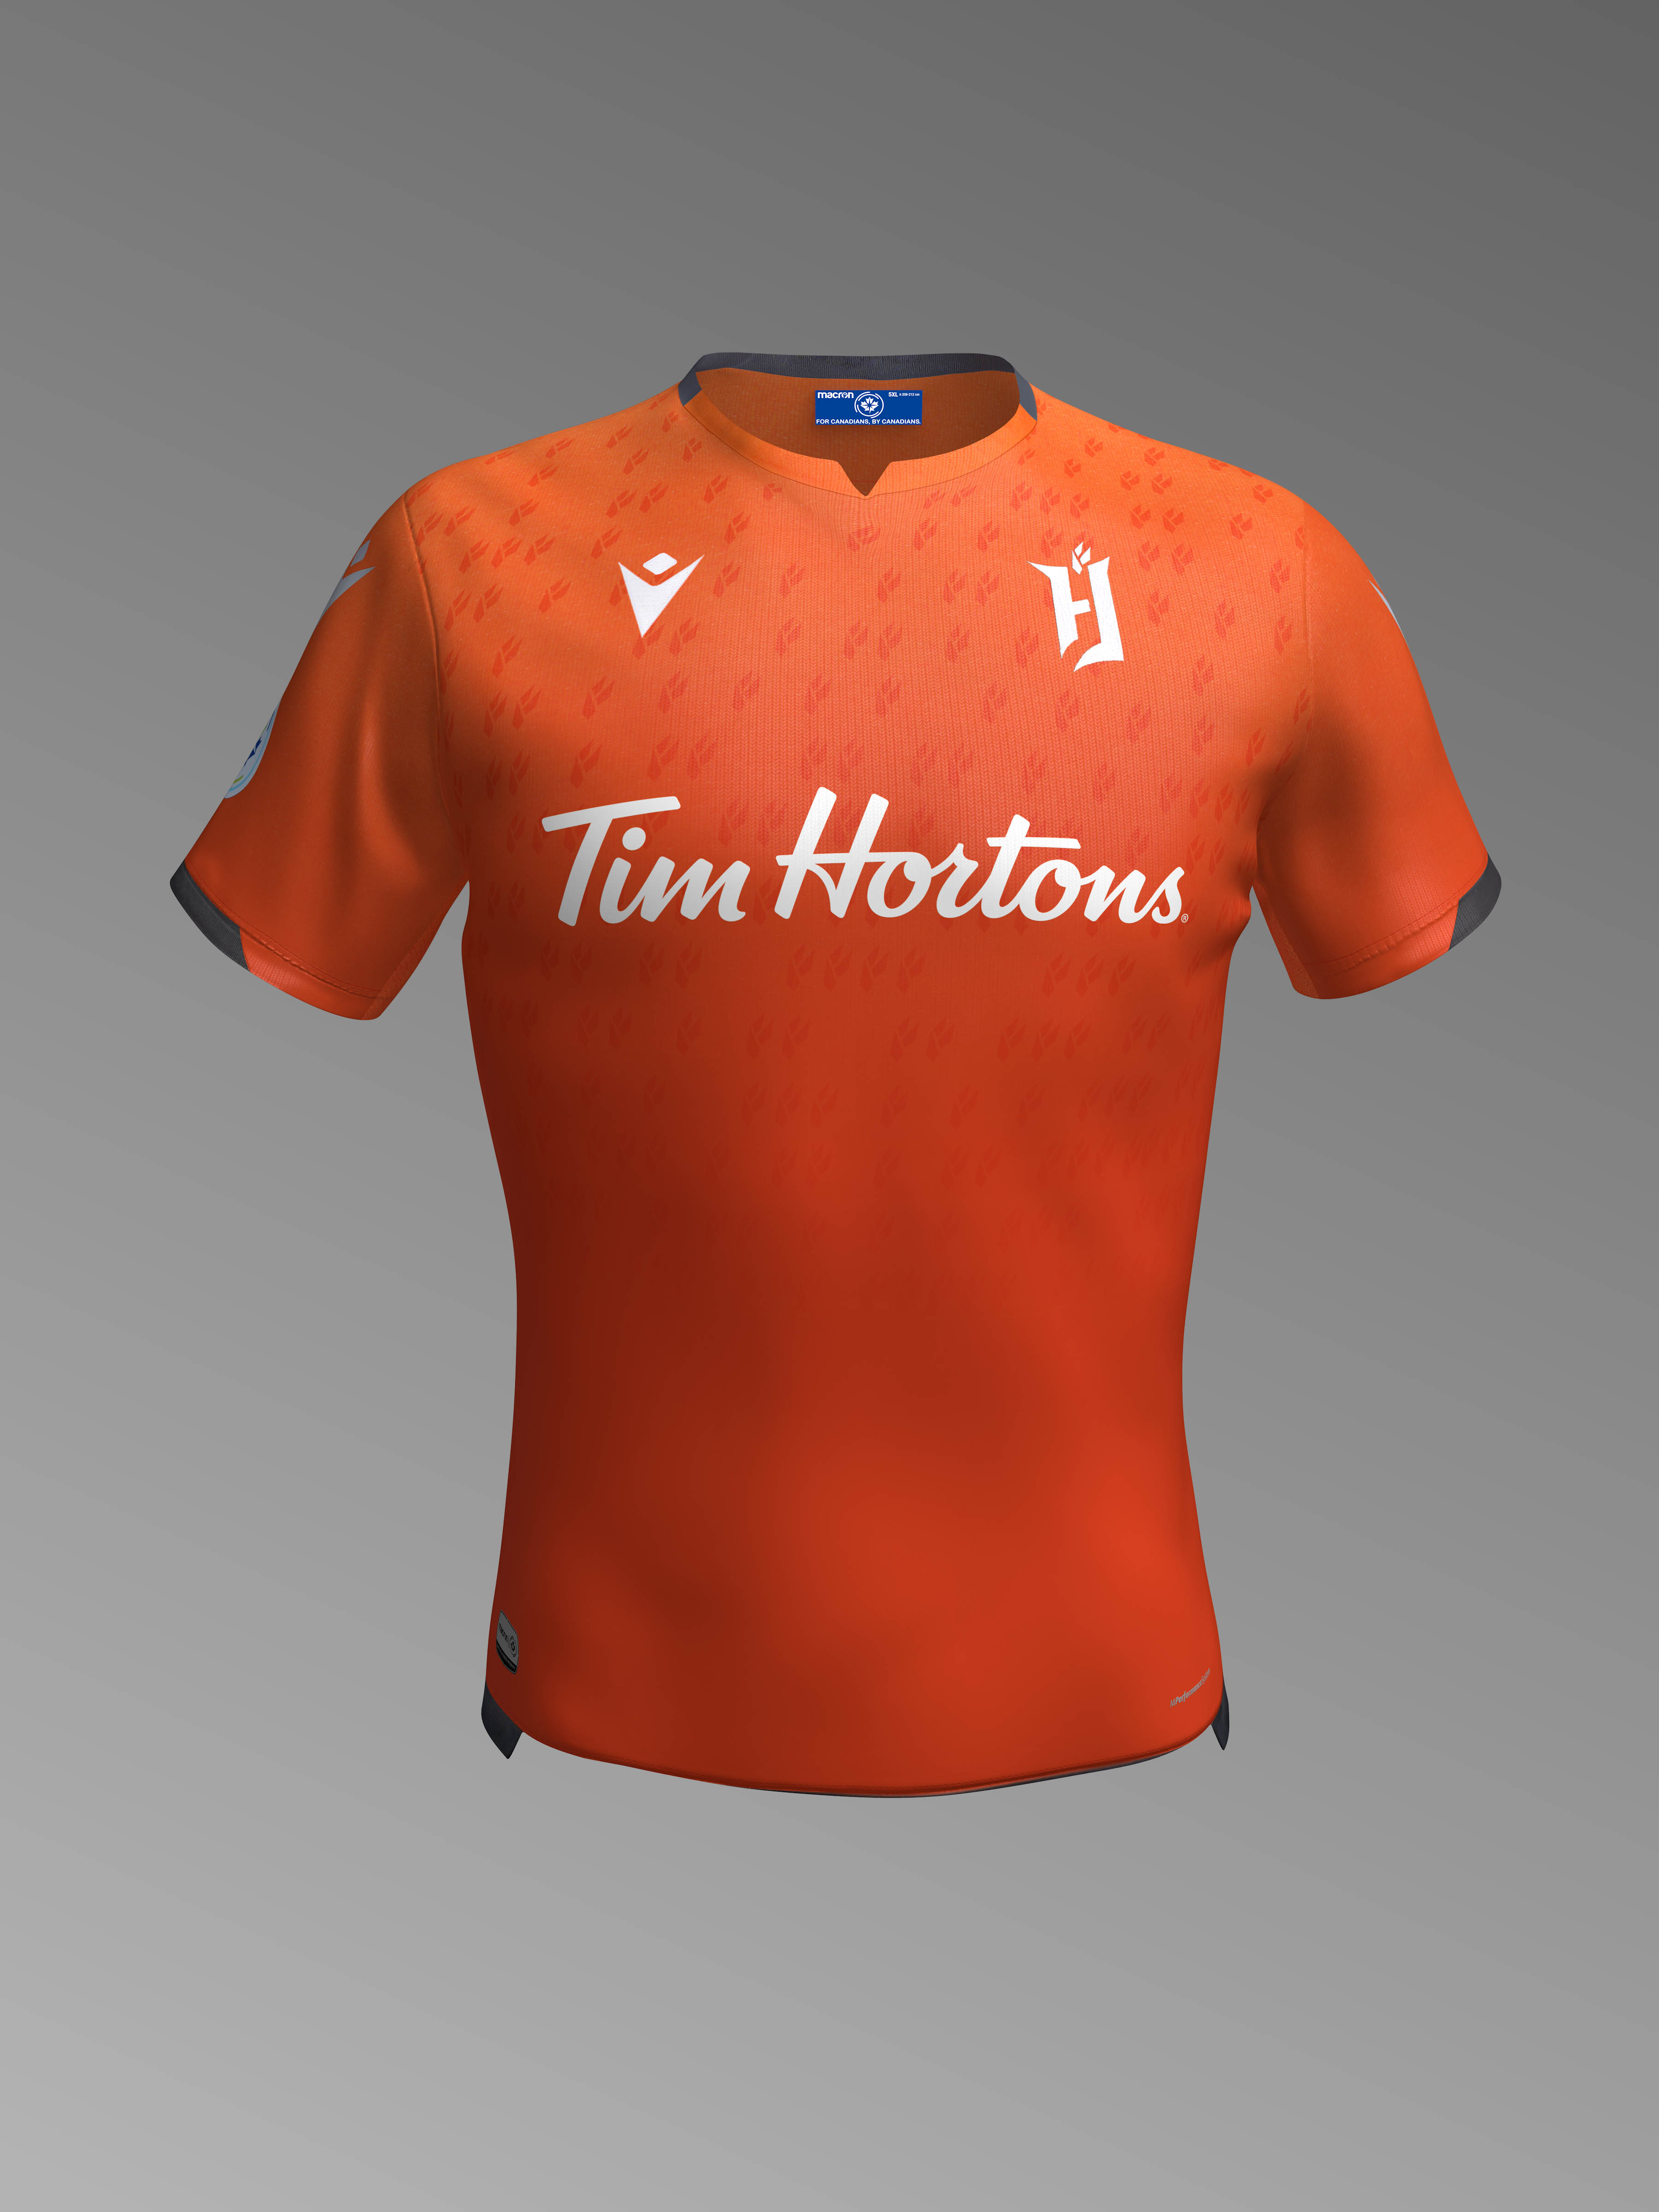 canadian-premier-league-founding-club-kits-3